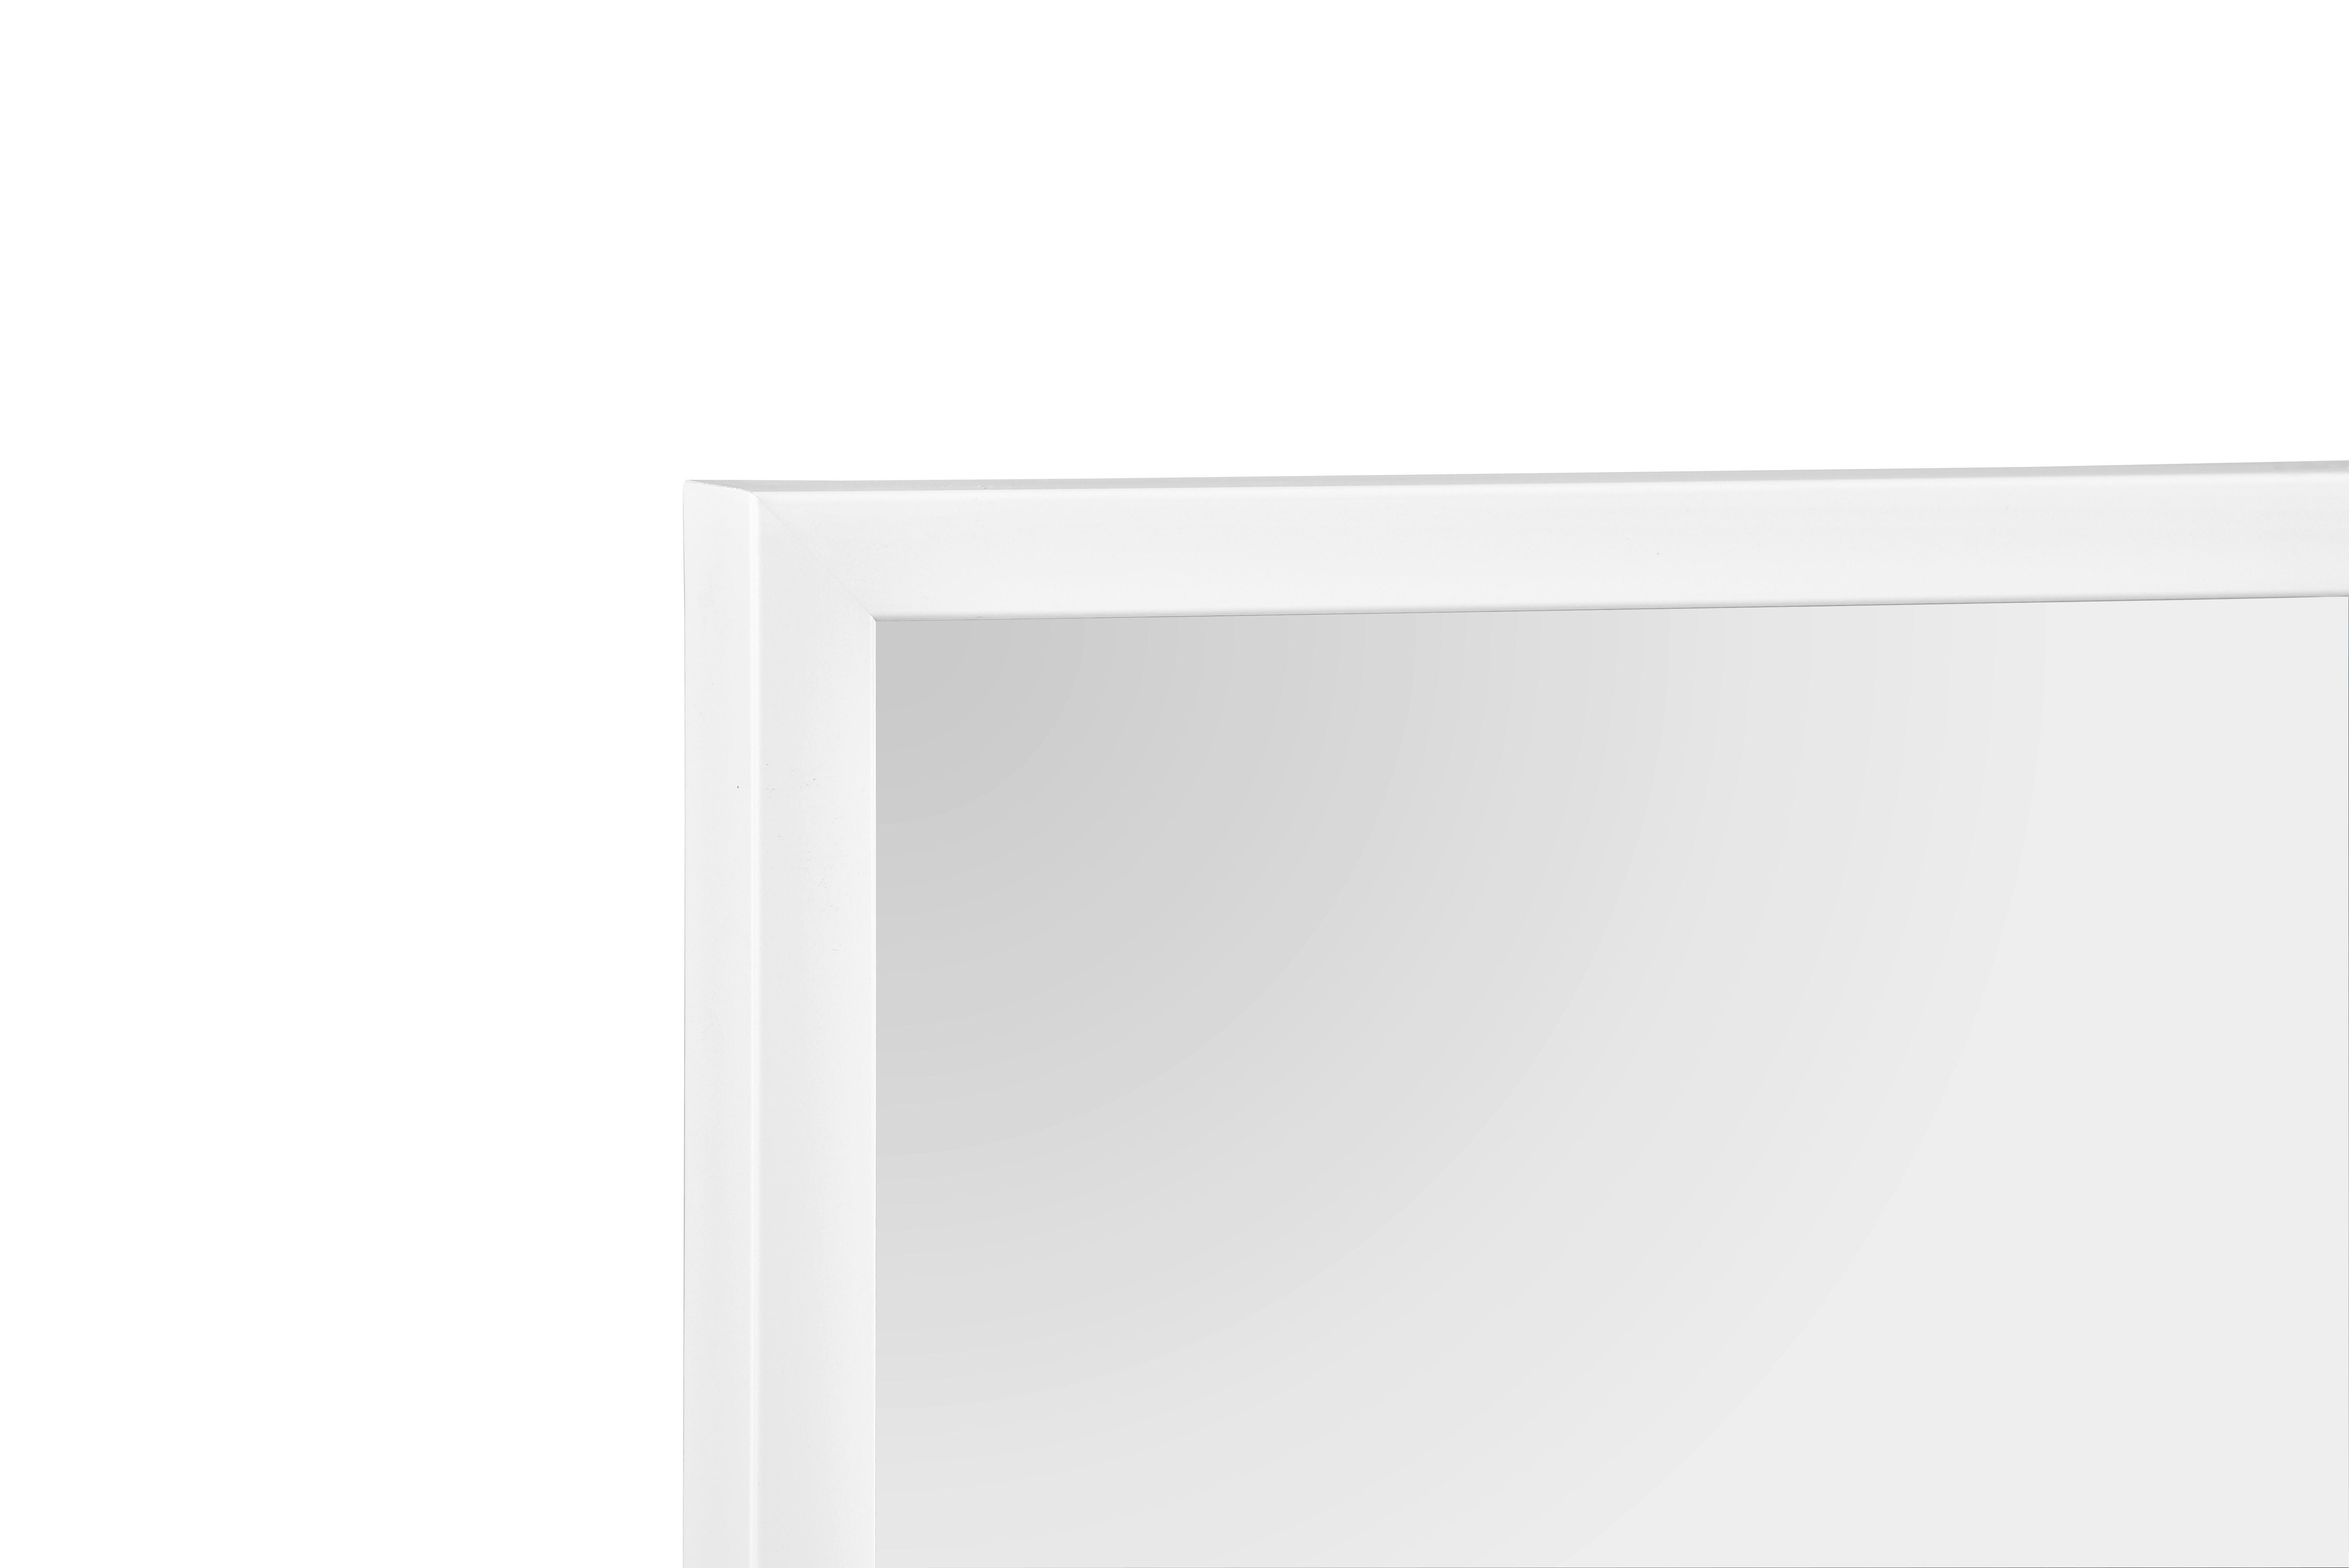 Rahmenspiegel Alea weiß B/H: ca. 32x124 cm Alea - weiß (32,00/124,00cm)